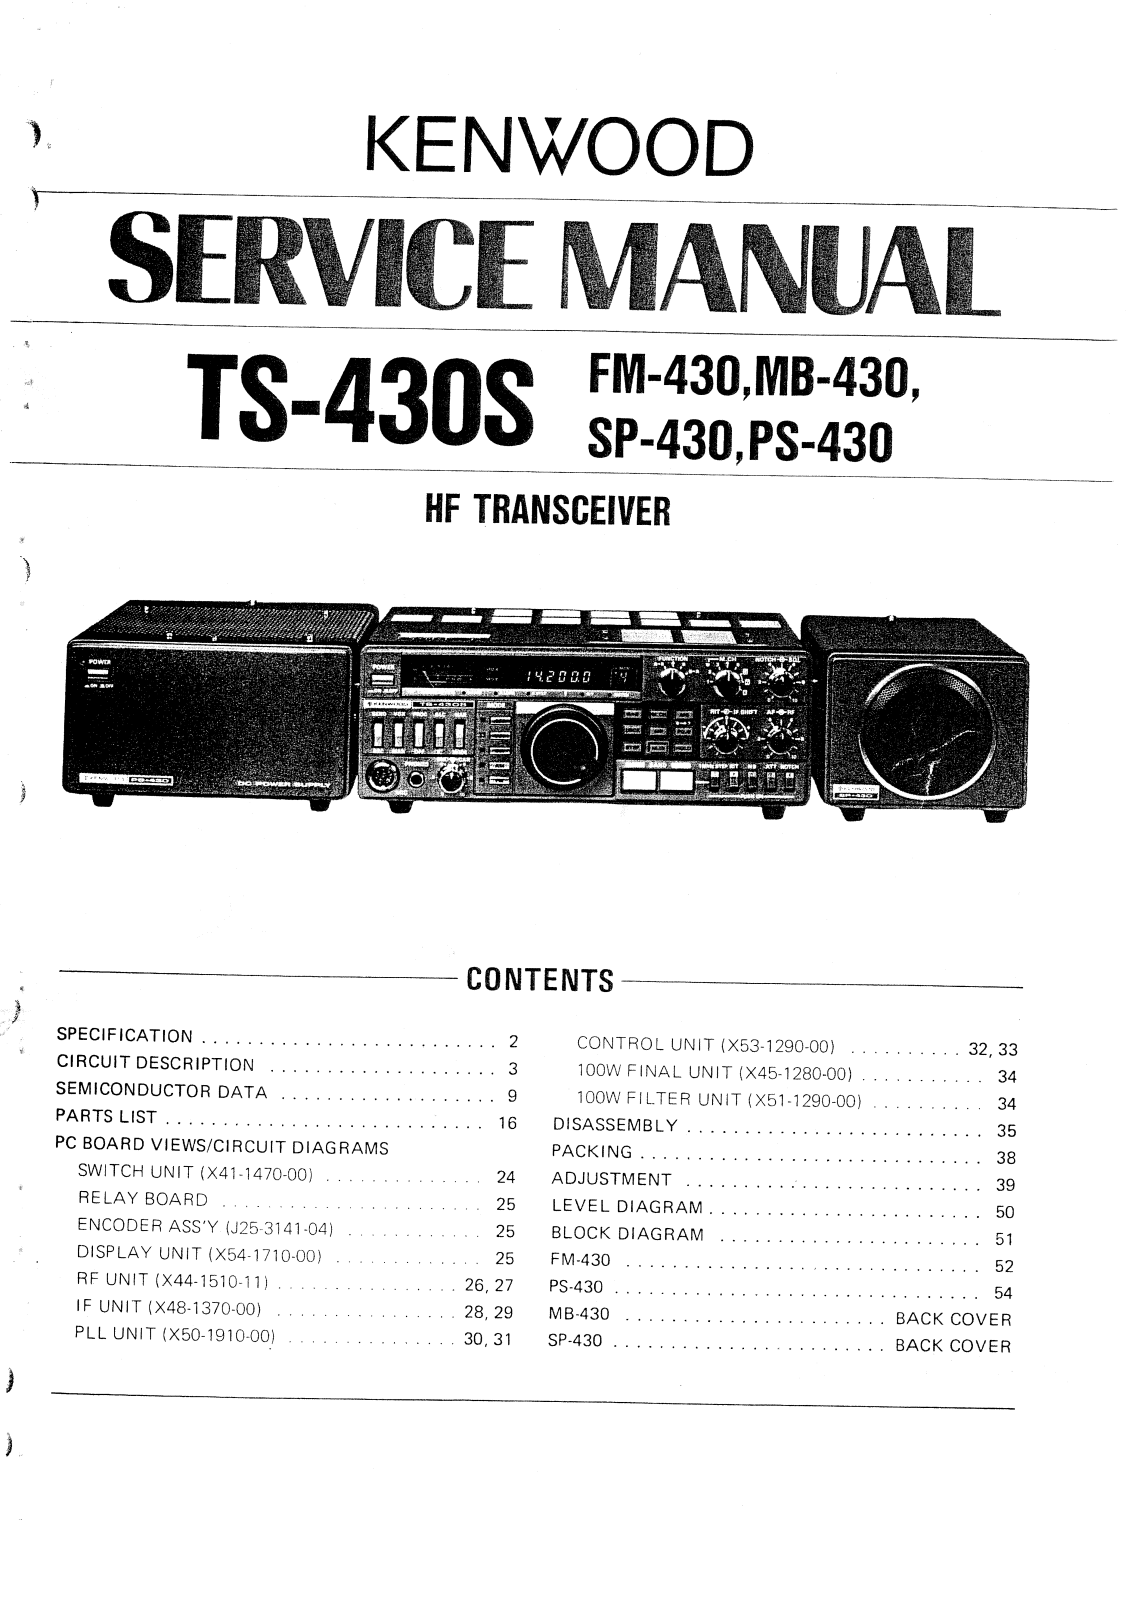 Kenwood FM-430, TS-430S, MB-430, SP-430, PS-430 Service Manual